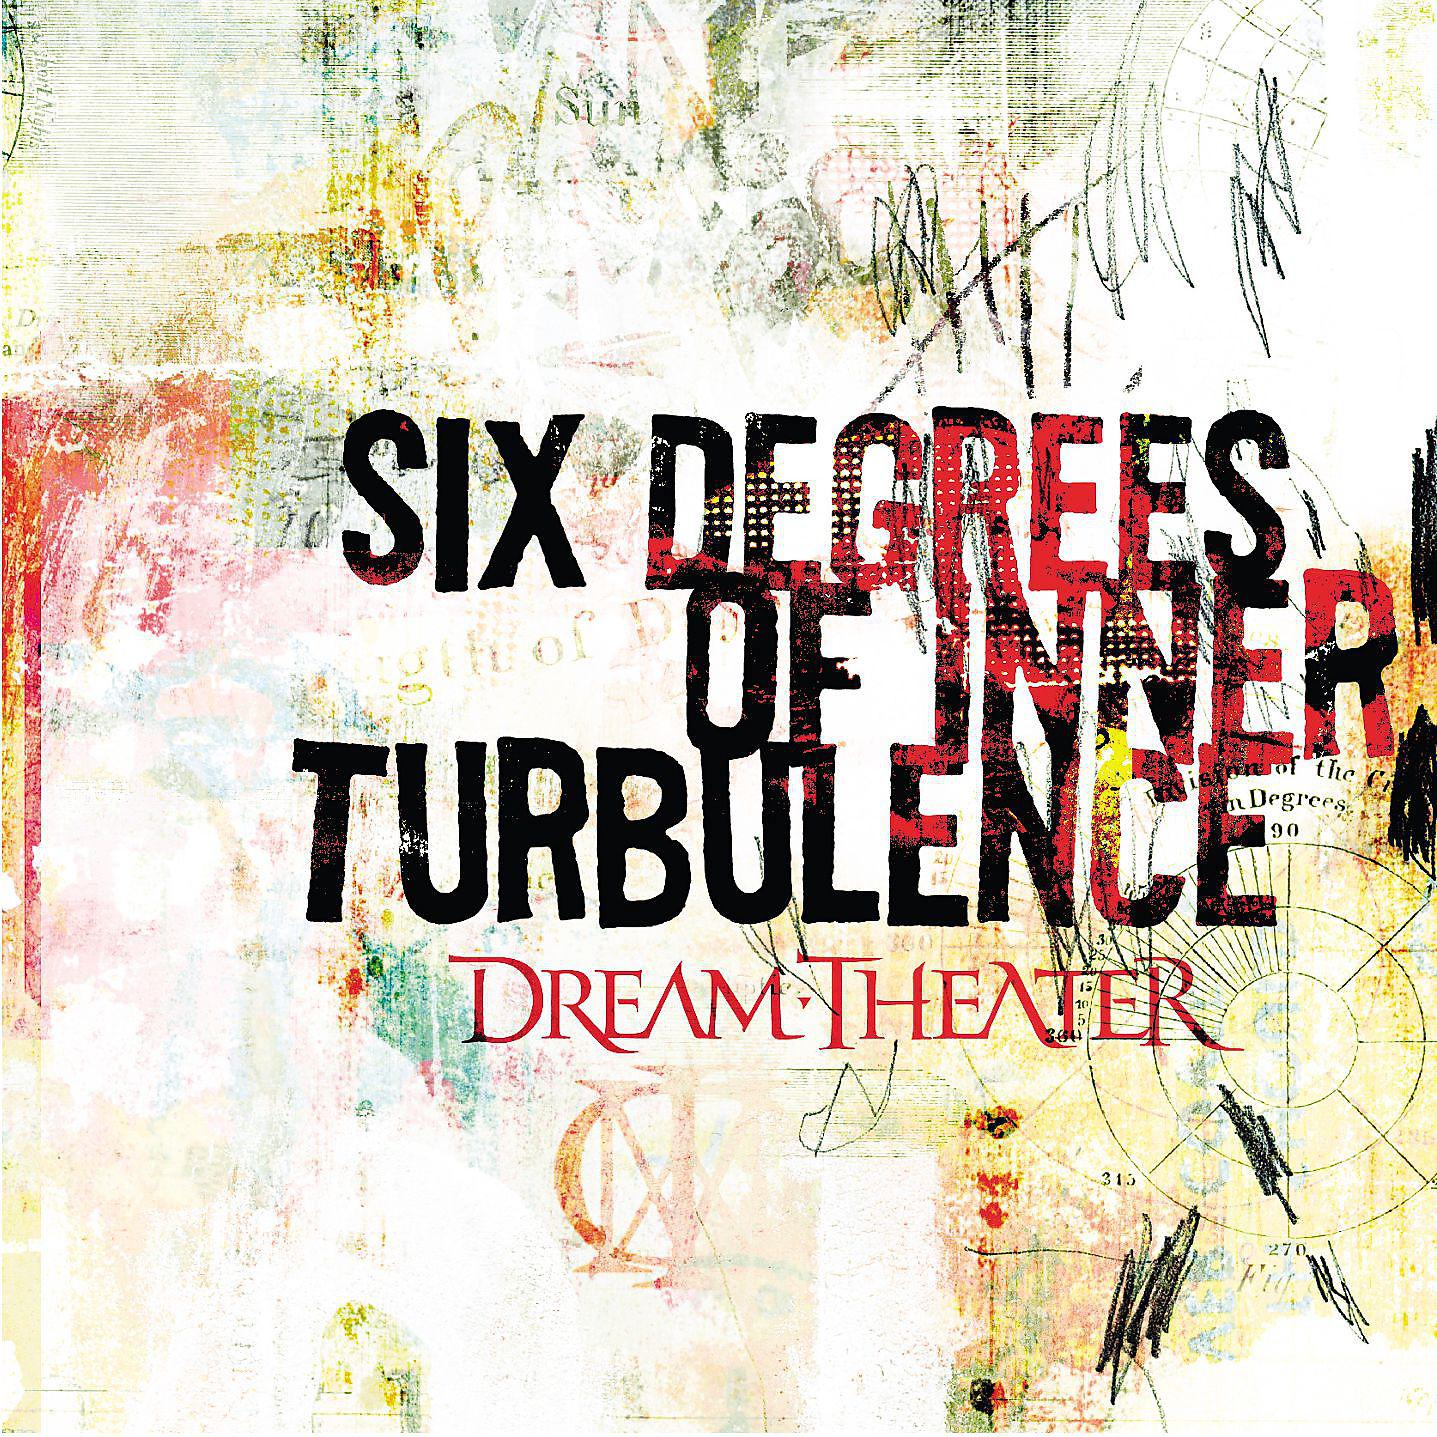 Альбом theatre dreams. Dream Theater Six degrees of Inner Turbulence 2002. Dream Theater Six degrees of Inner Turbulence обложка. Dream Theater обложки альбомов. Дрим театр альбомы.